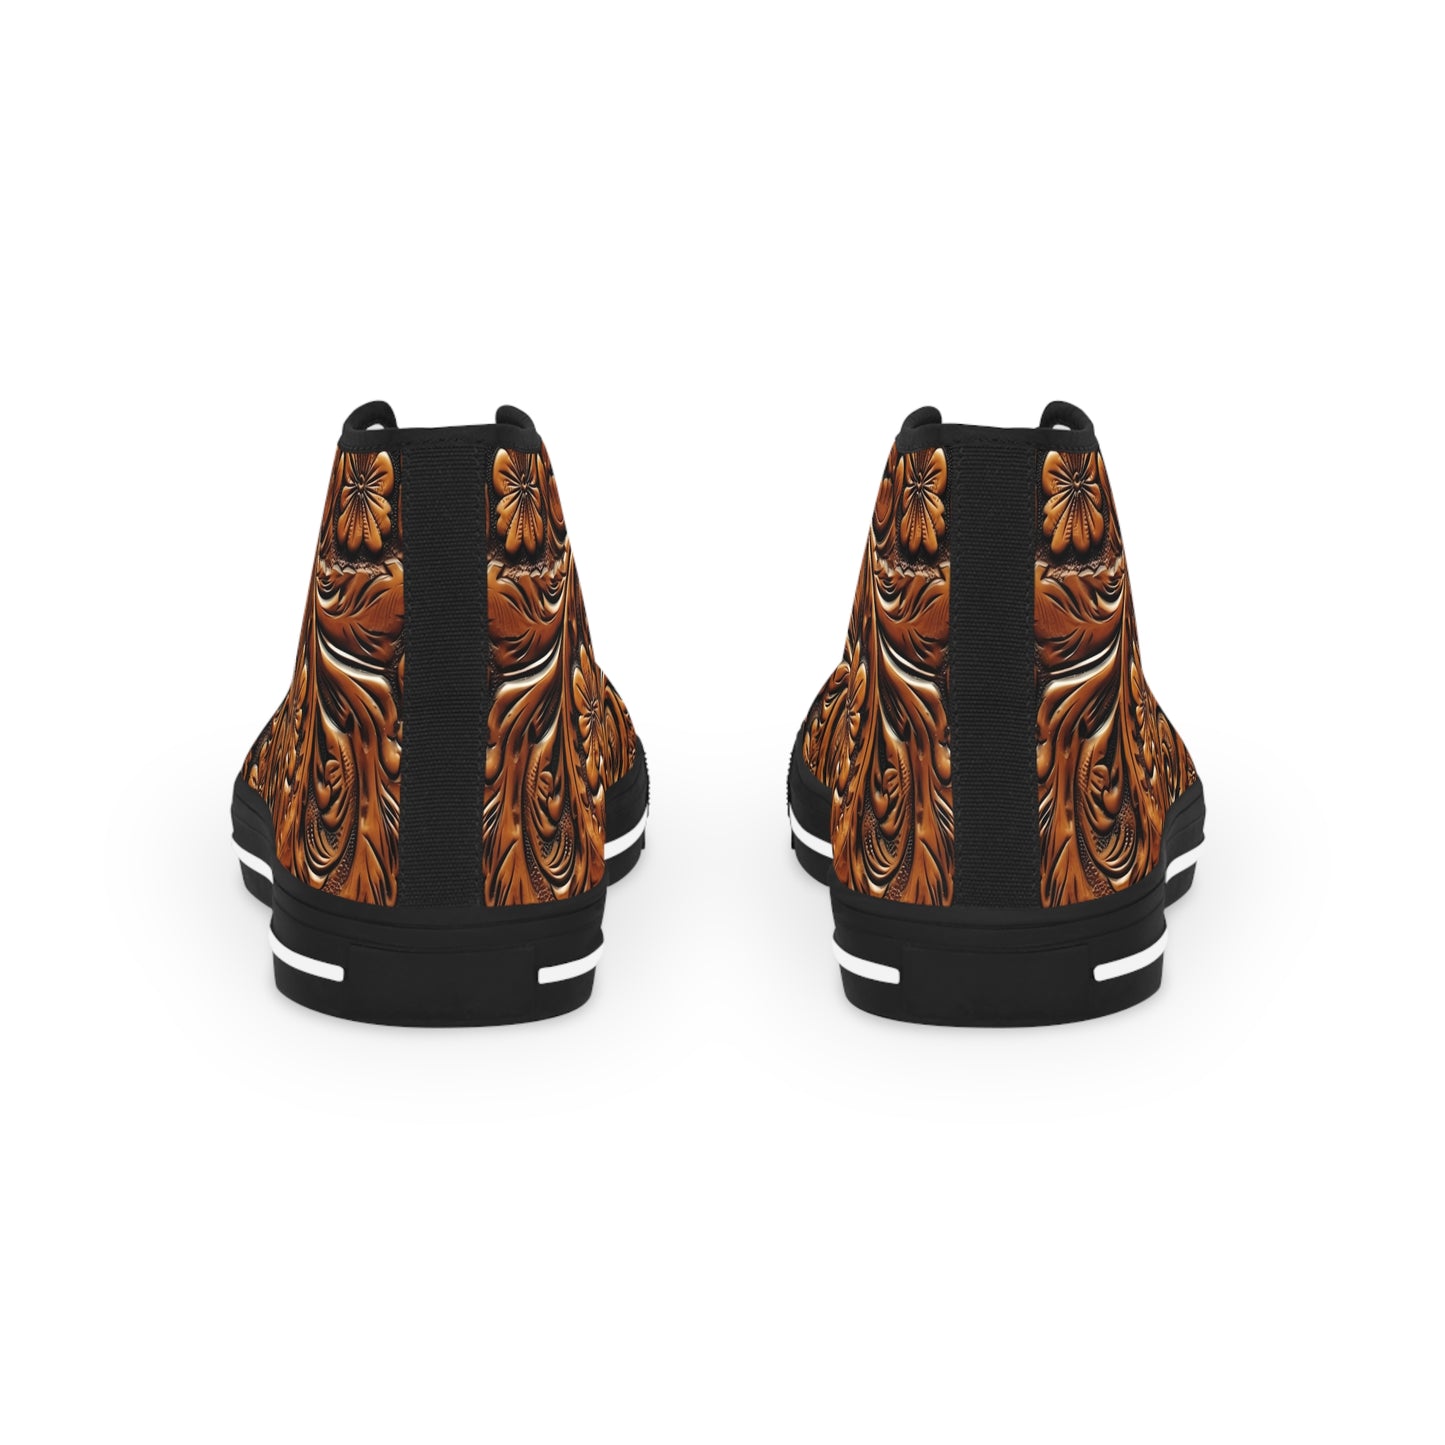 Tooled Leather Men's High-Top Sneakers (Black) by Studio Ten Design